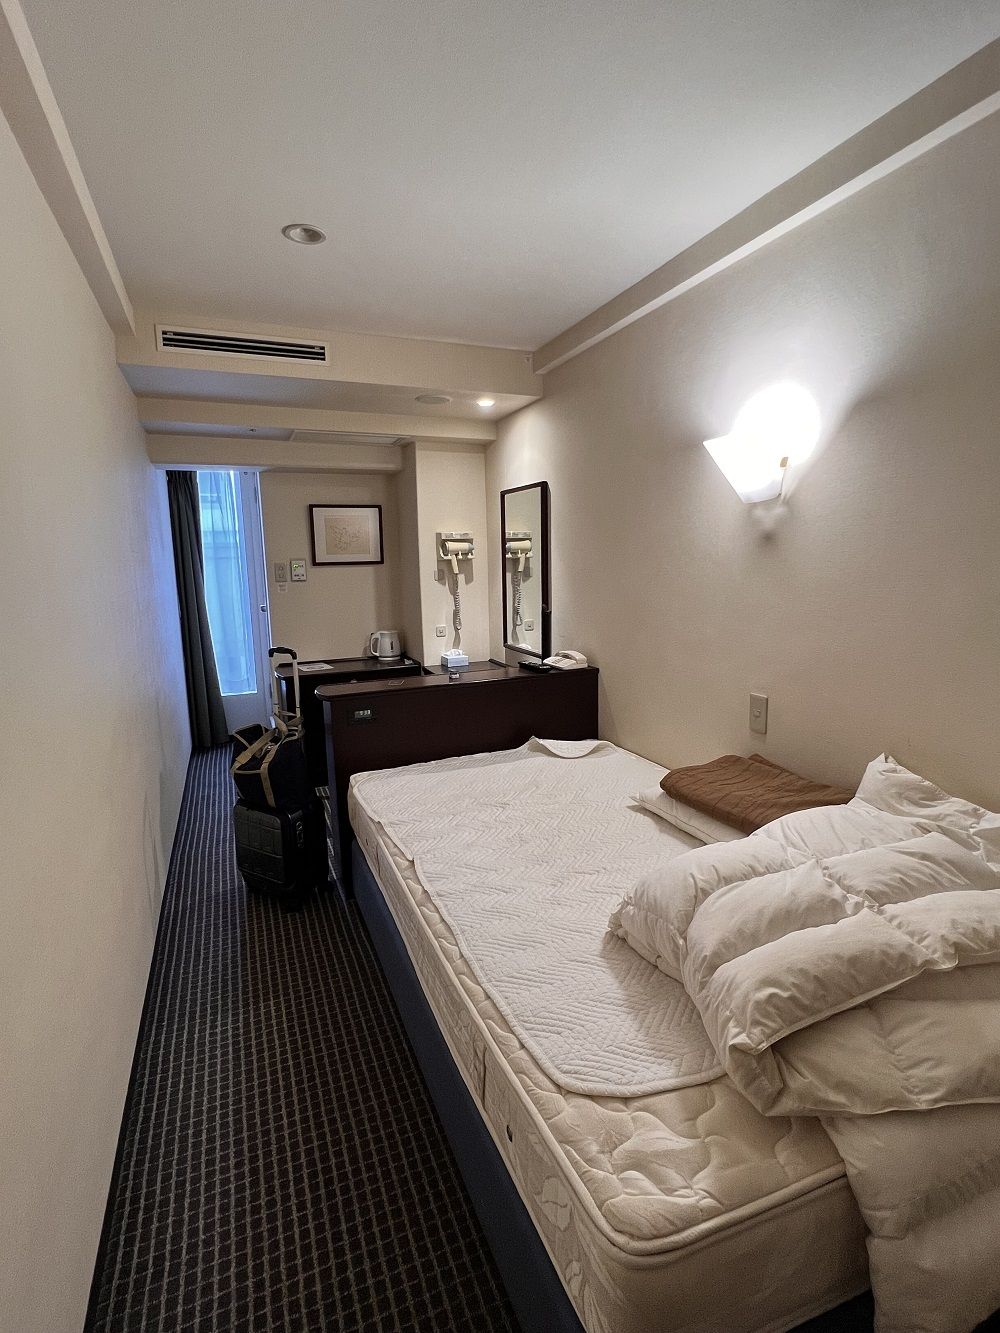 Mさんが宿泊したホテルの室内。東京都内には34カ所のホテル療養施設があり、なんとペット同伴が可能な施設もある（8月25日時点の情報）（写真提供・Mさん）